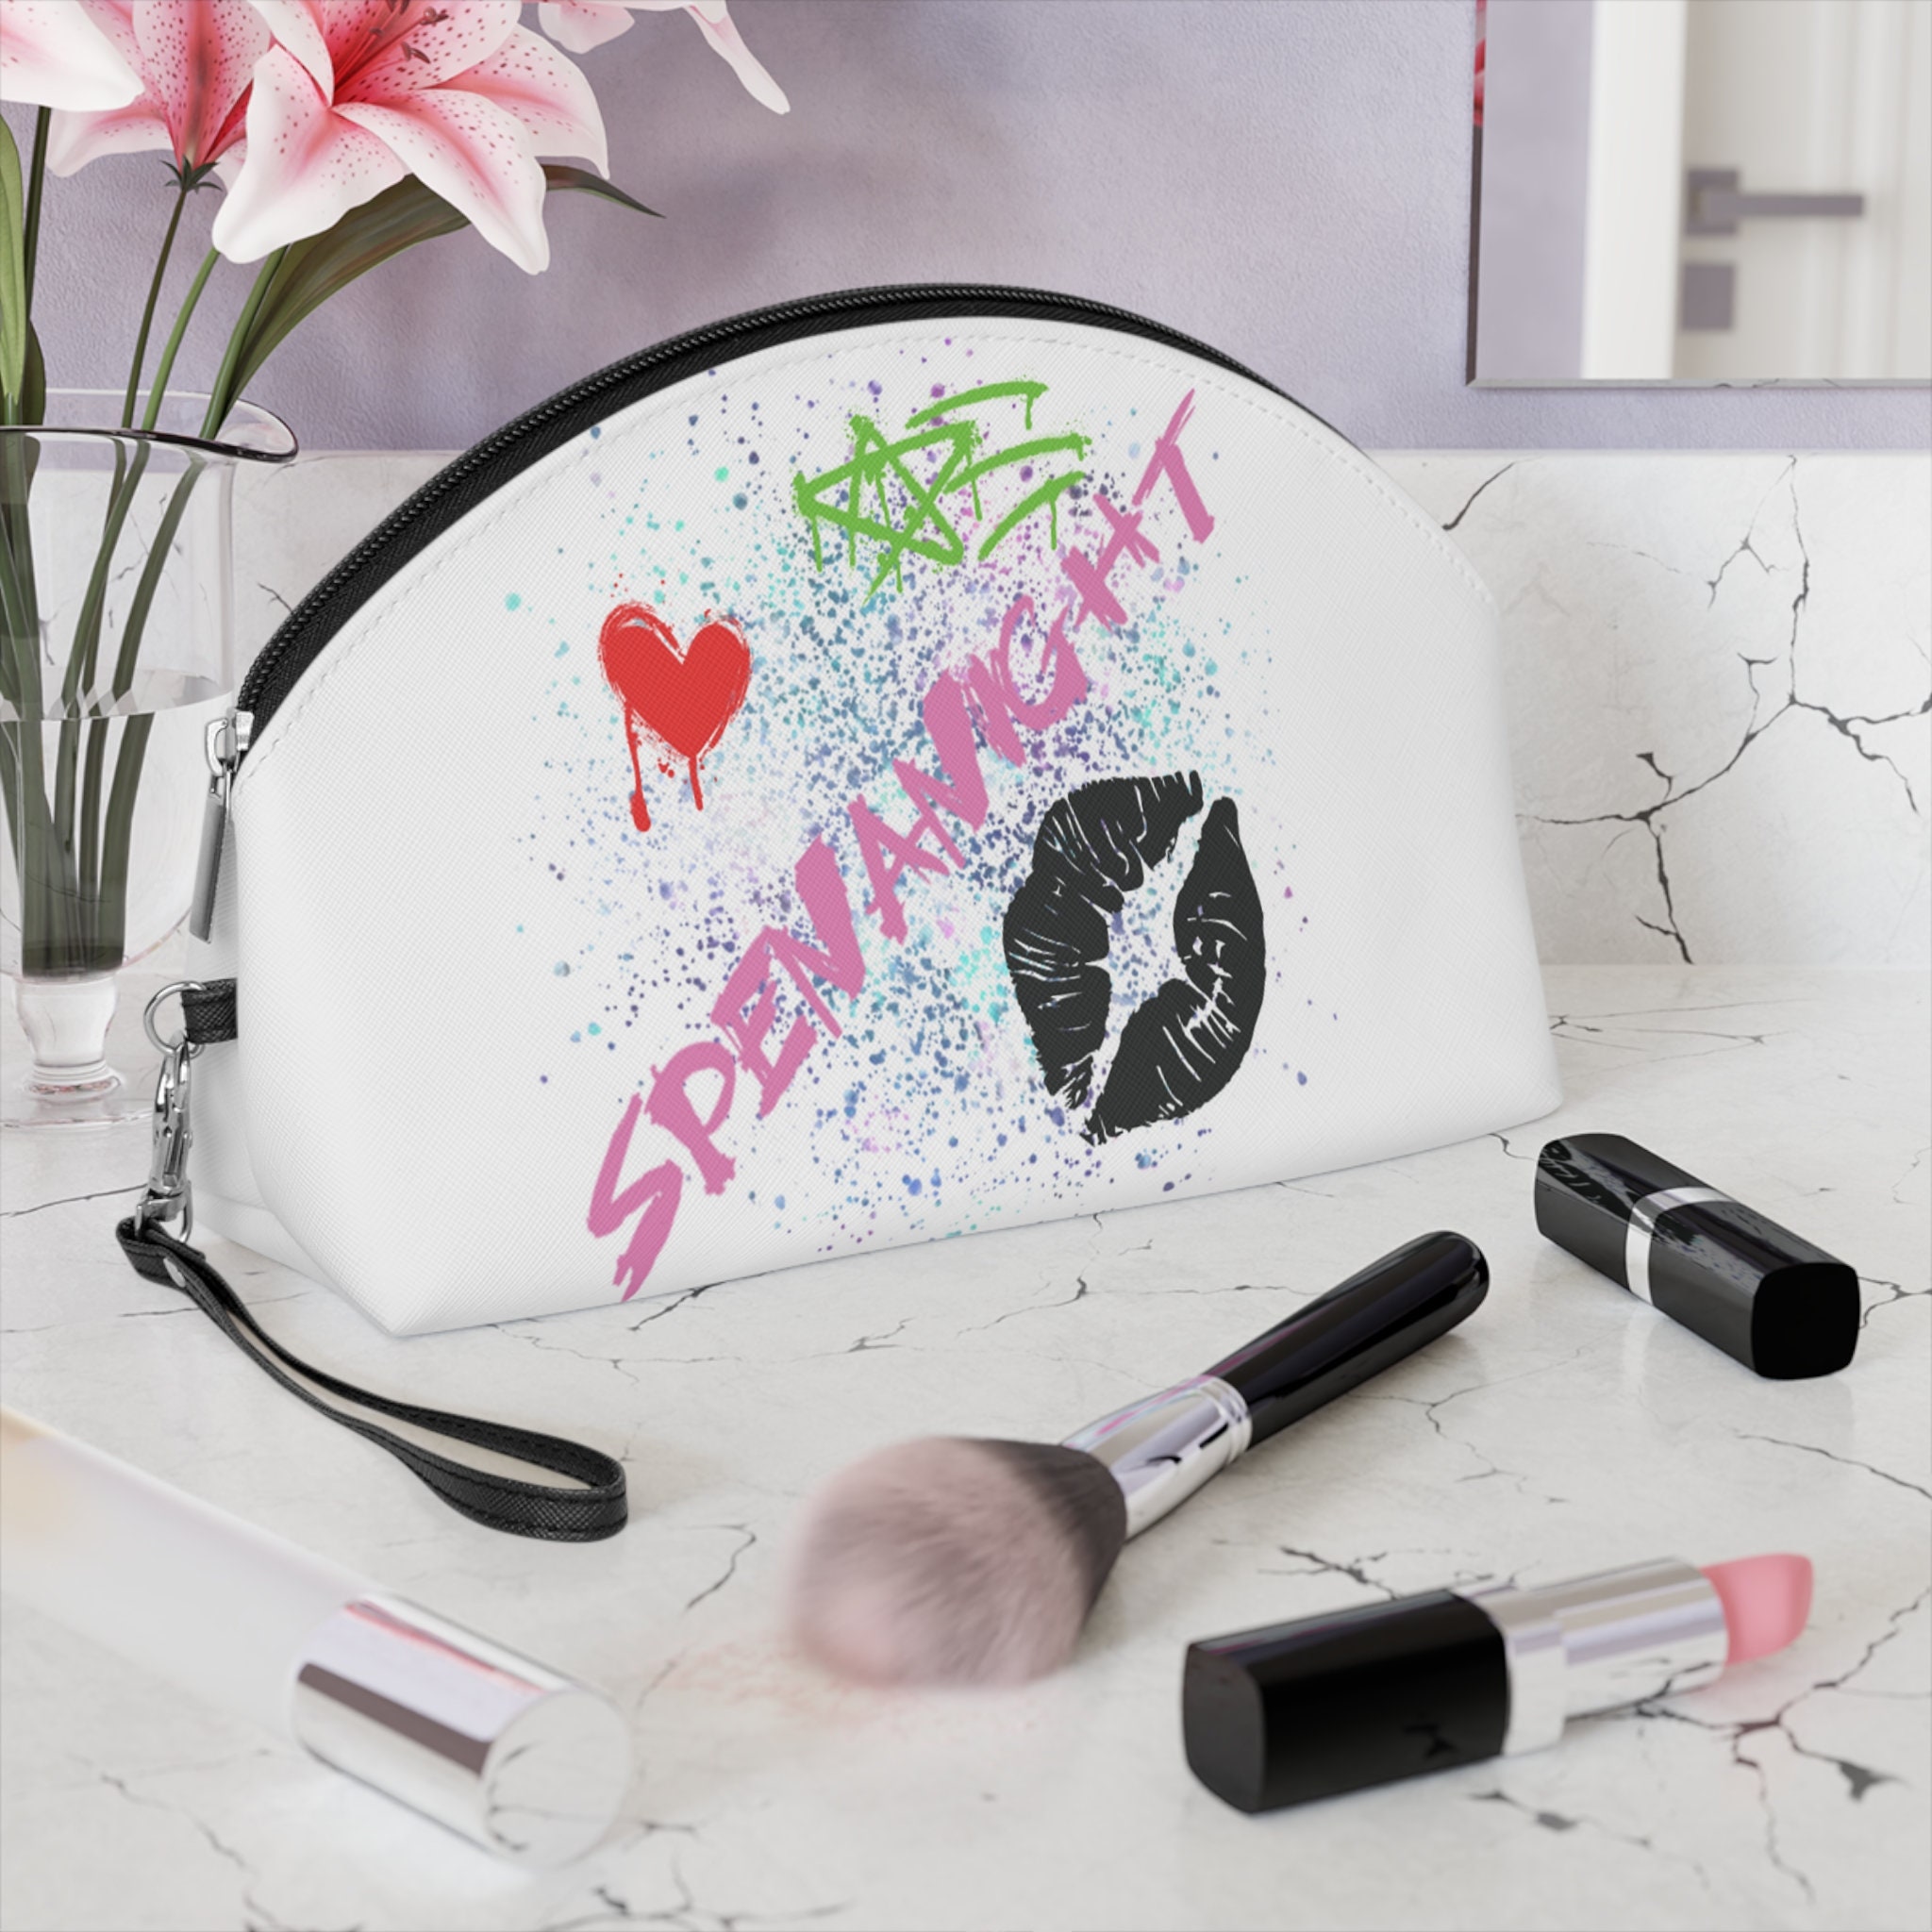 Pink Spend The Night Bag Fashion Sac De Voyage Femme Bolsos Sneak Link Duffel  Overnight Hoe Bag 2022 Spendanight Bag for Women - AliExpress